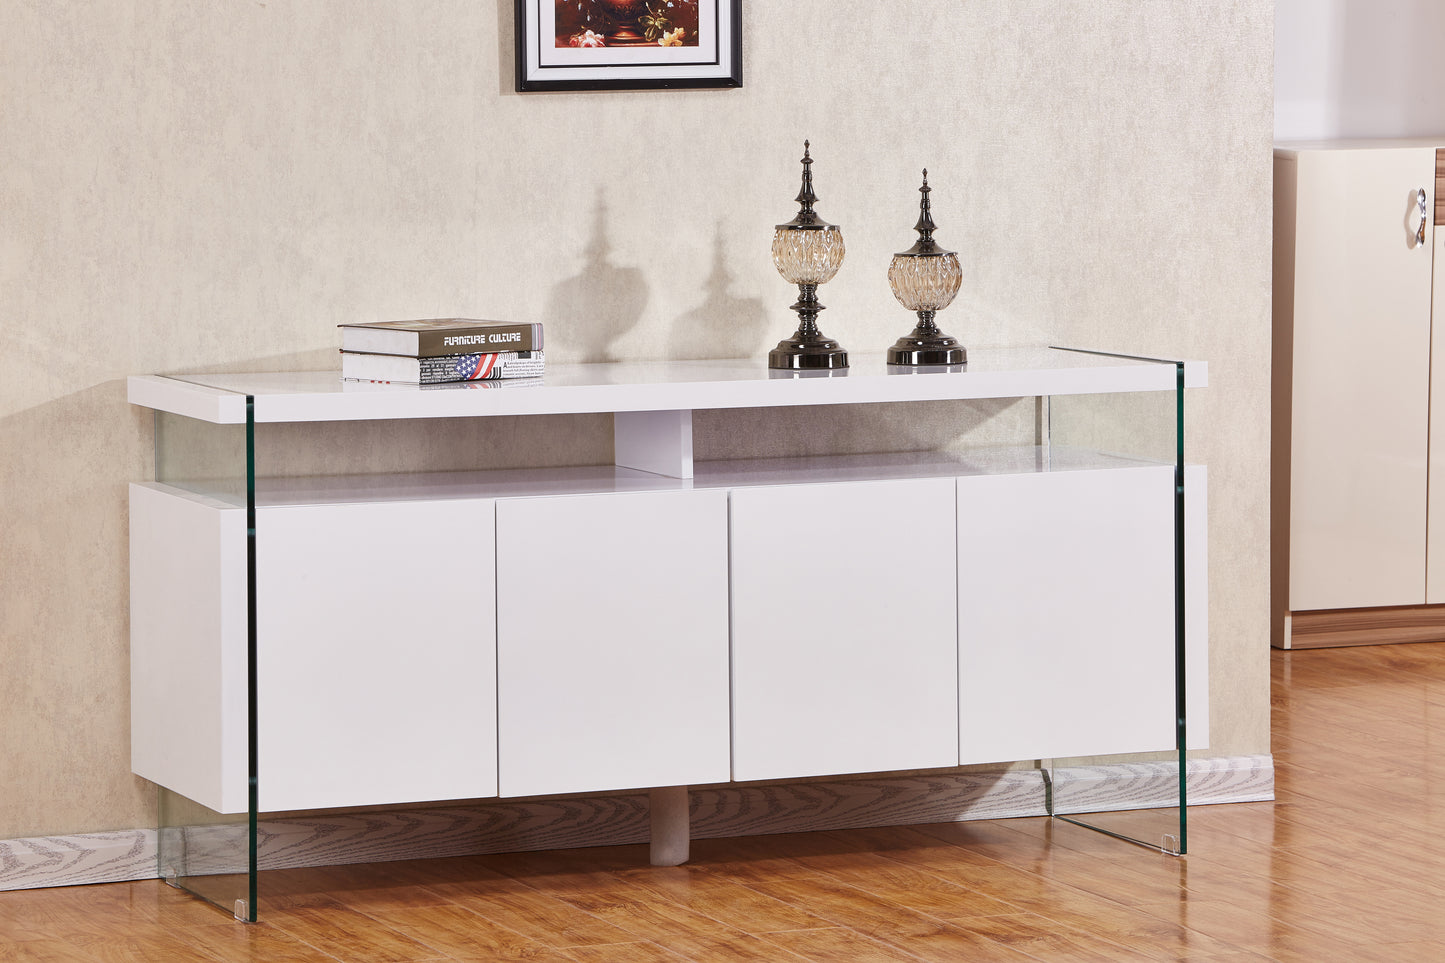 EURO-BQAC33 - High Gloss Server Cabinet - Eurohaus Modern Furniture LLC